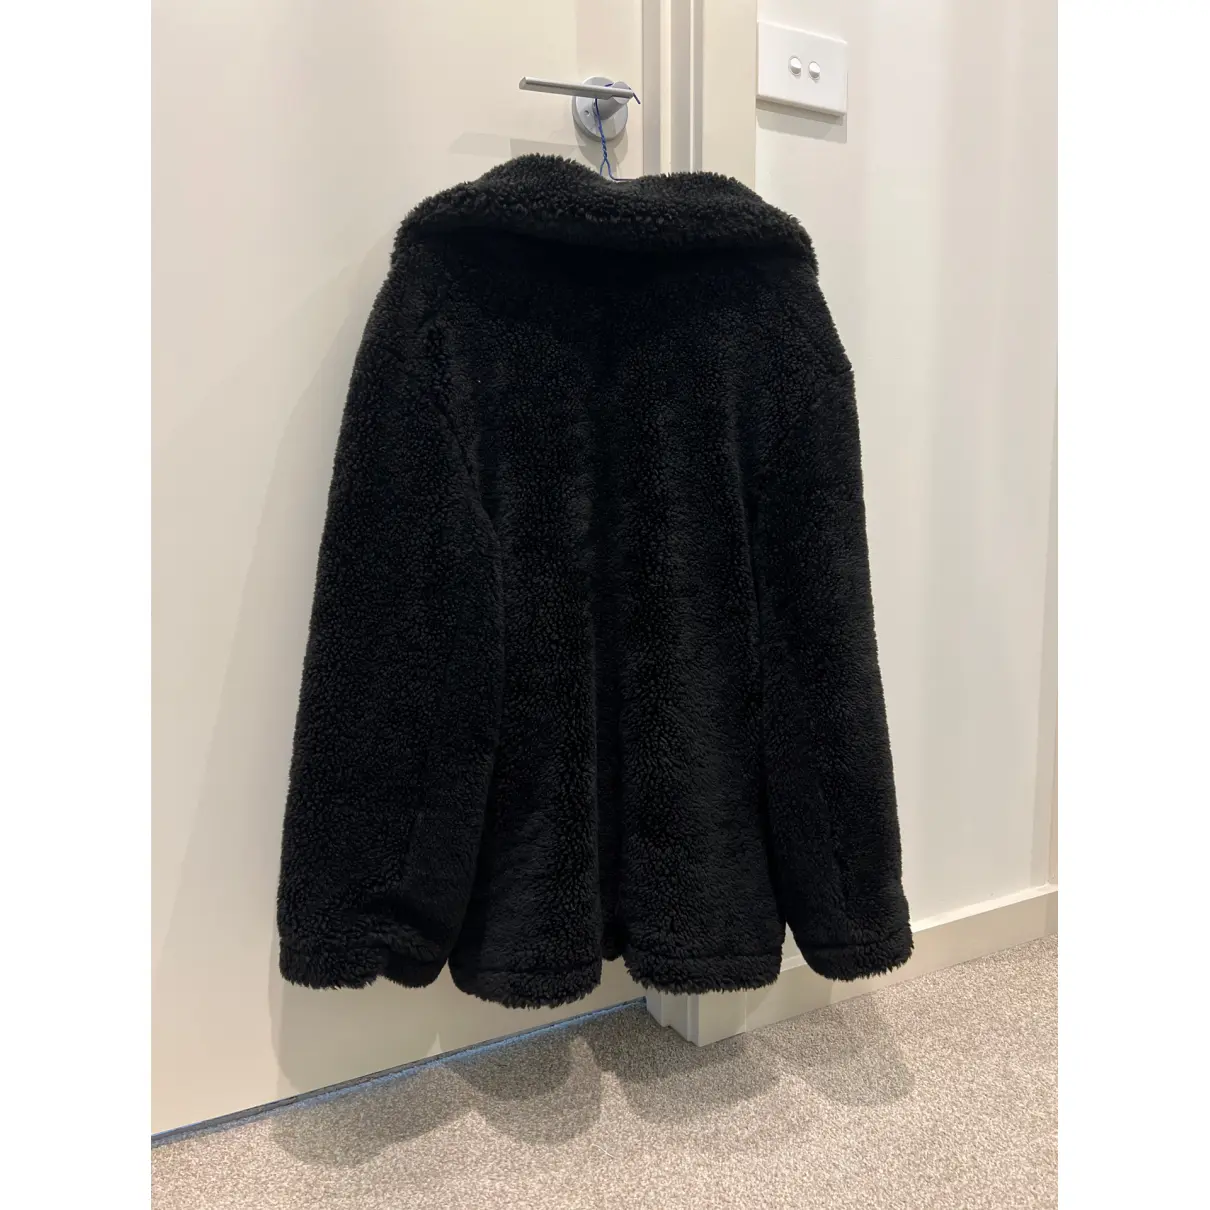 Buy WE11DONE Wool coat online